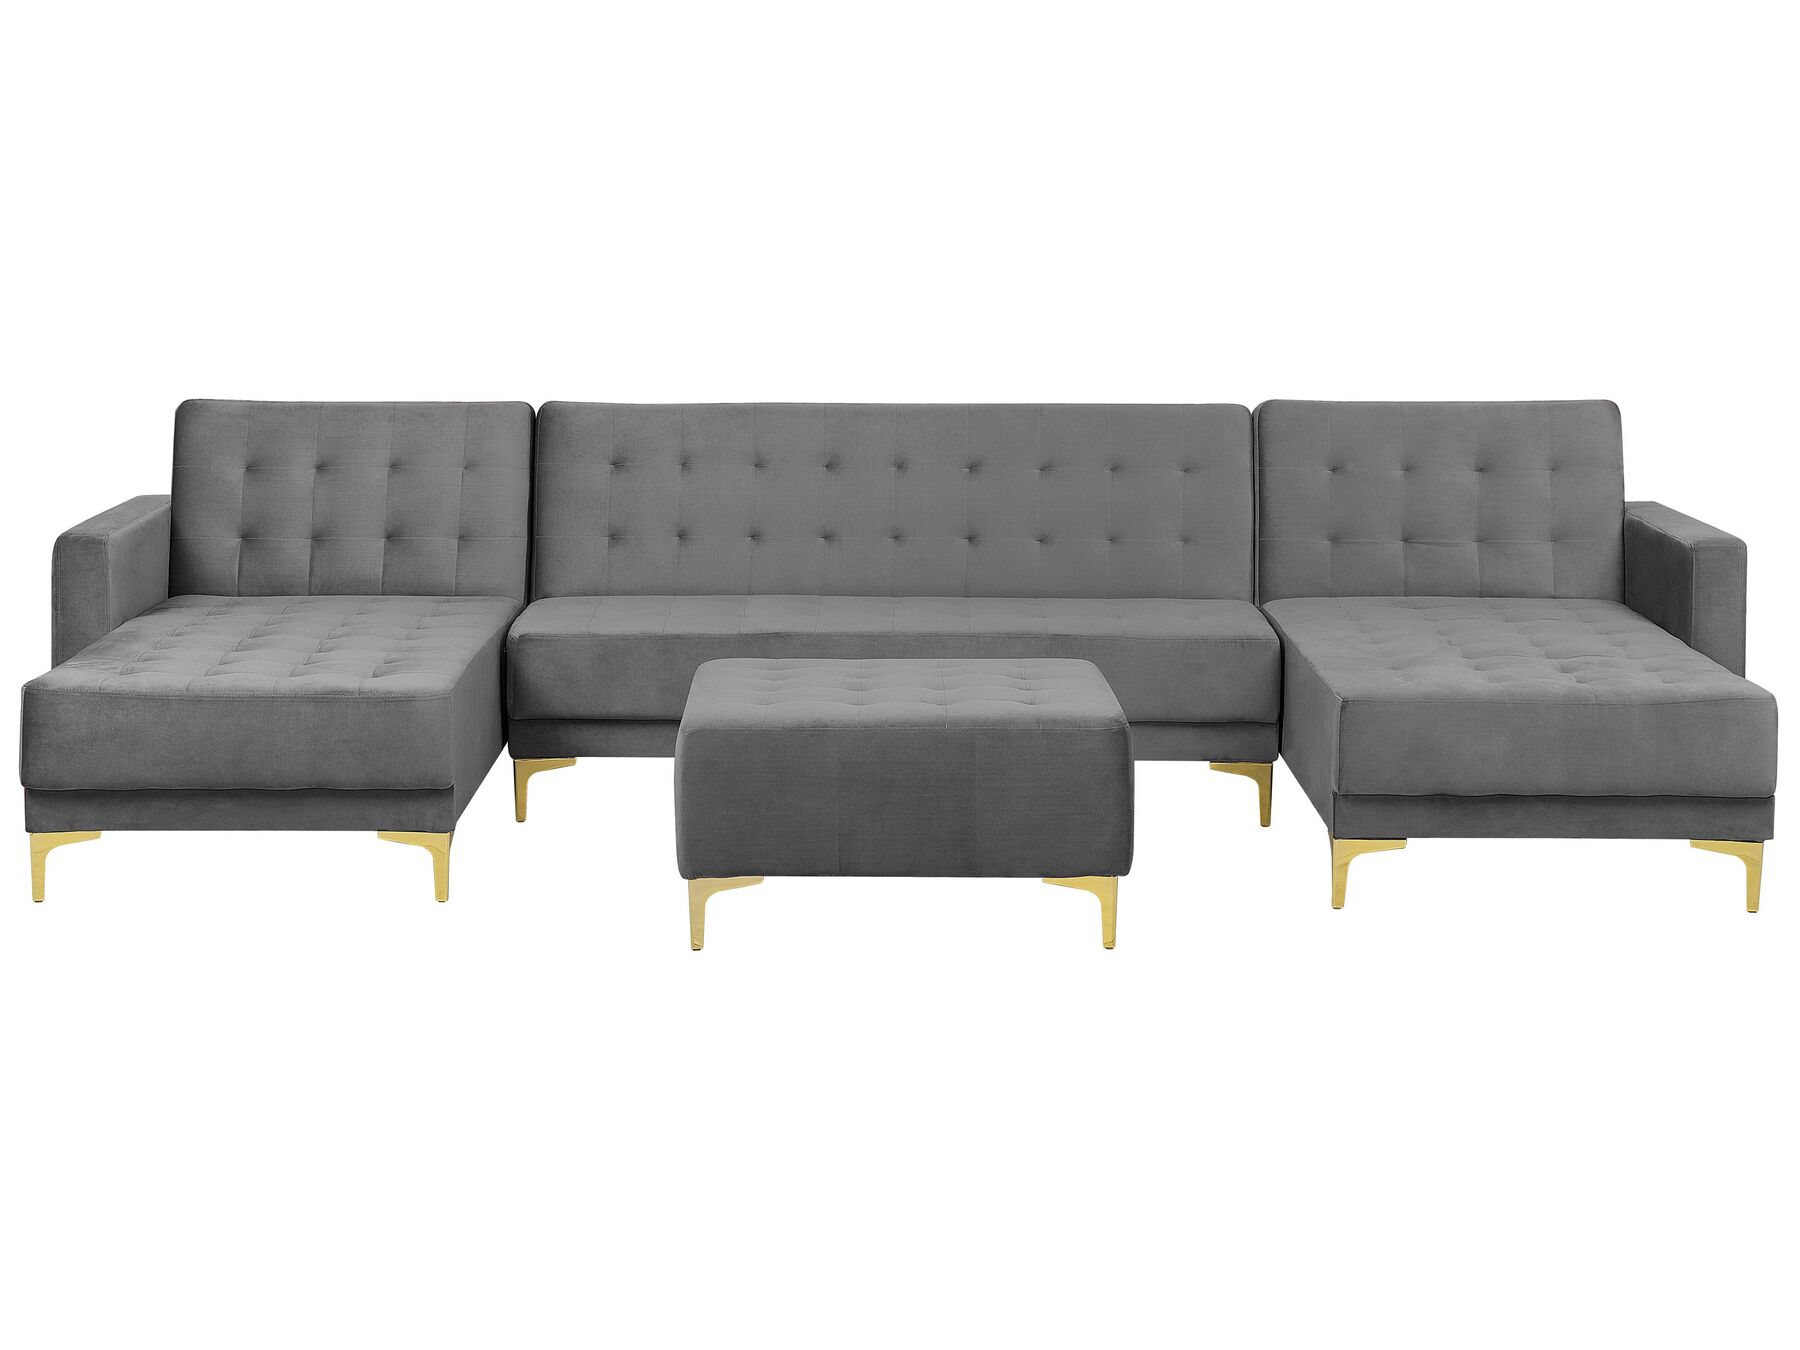 5 Seater U-Shaped Modular Velvet Sofa with Ottoman Grey ABERDEEN_741298